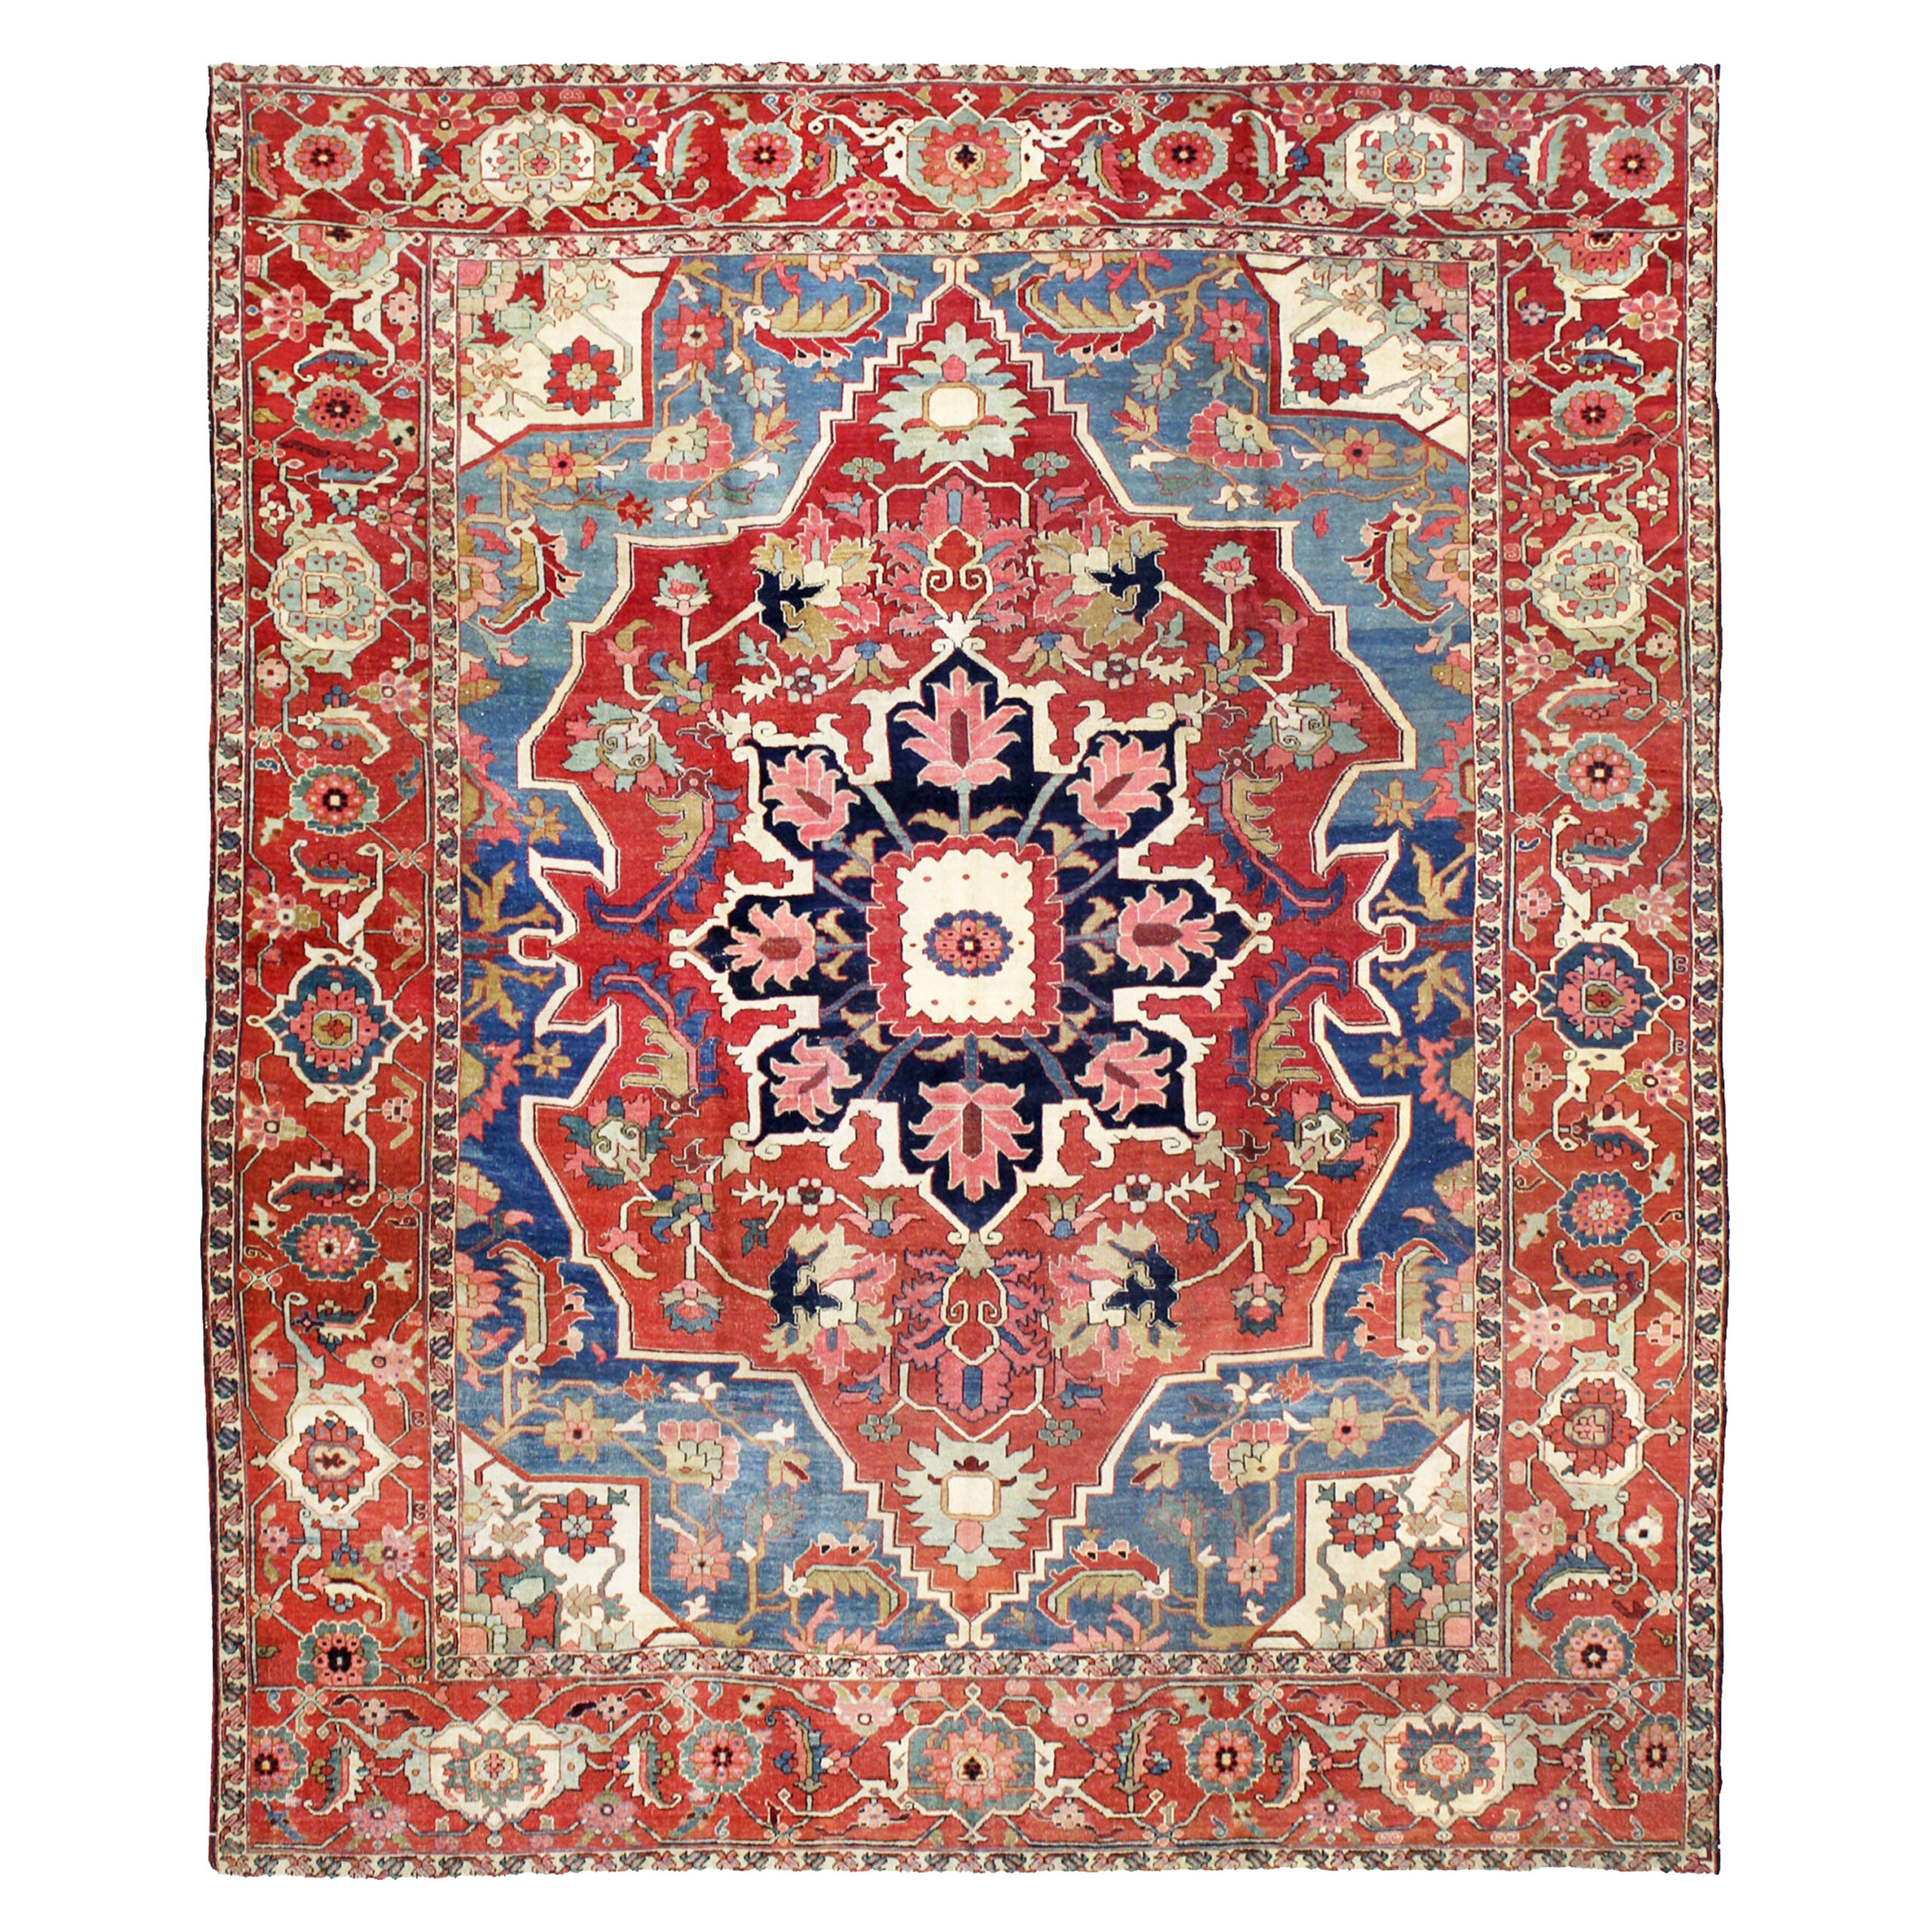 Antique Persian Heriz Serapi carpet with prized denim blue field, Douglas Stock Gallery, antique carpets Boston,MA area, antique Persian carpets